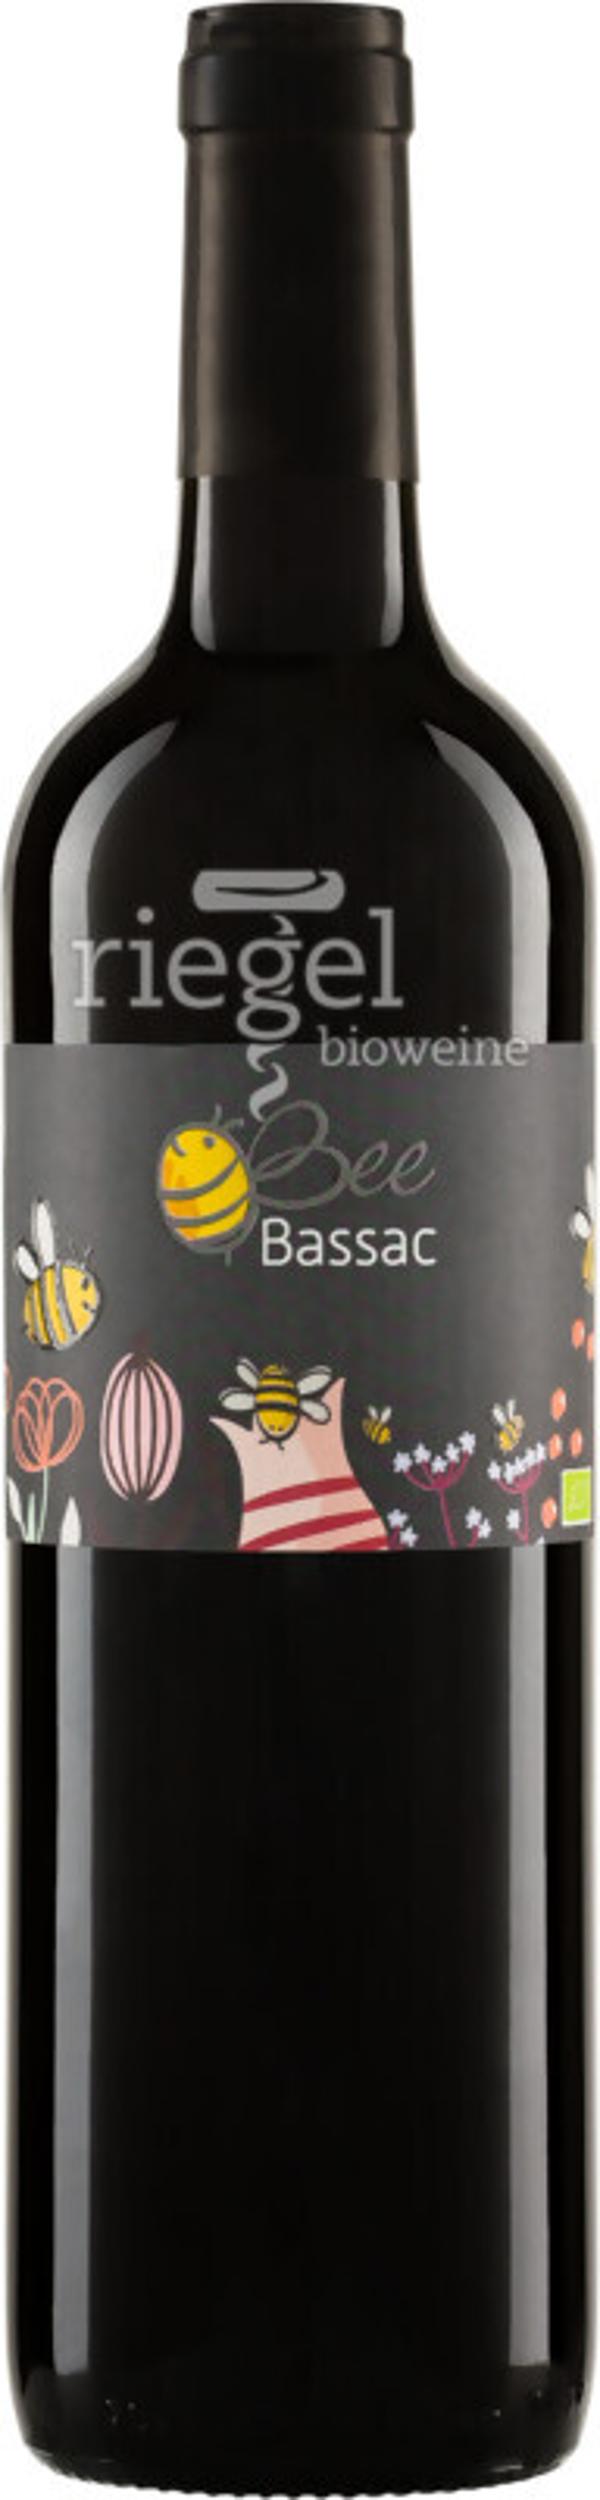 Produktfoto zu BEE BASSAC Rouge Côtes de Thon